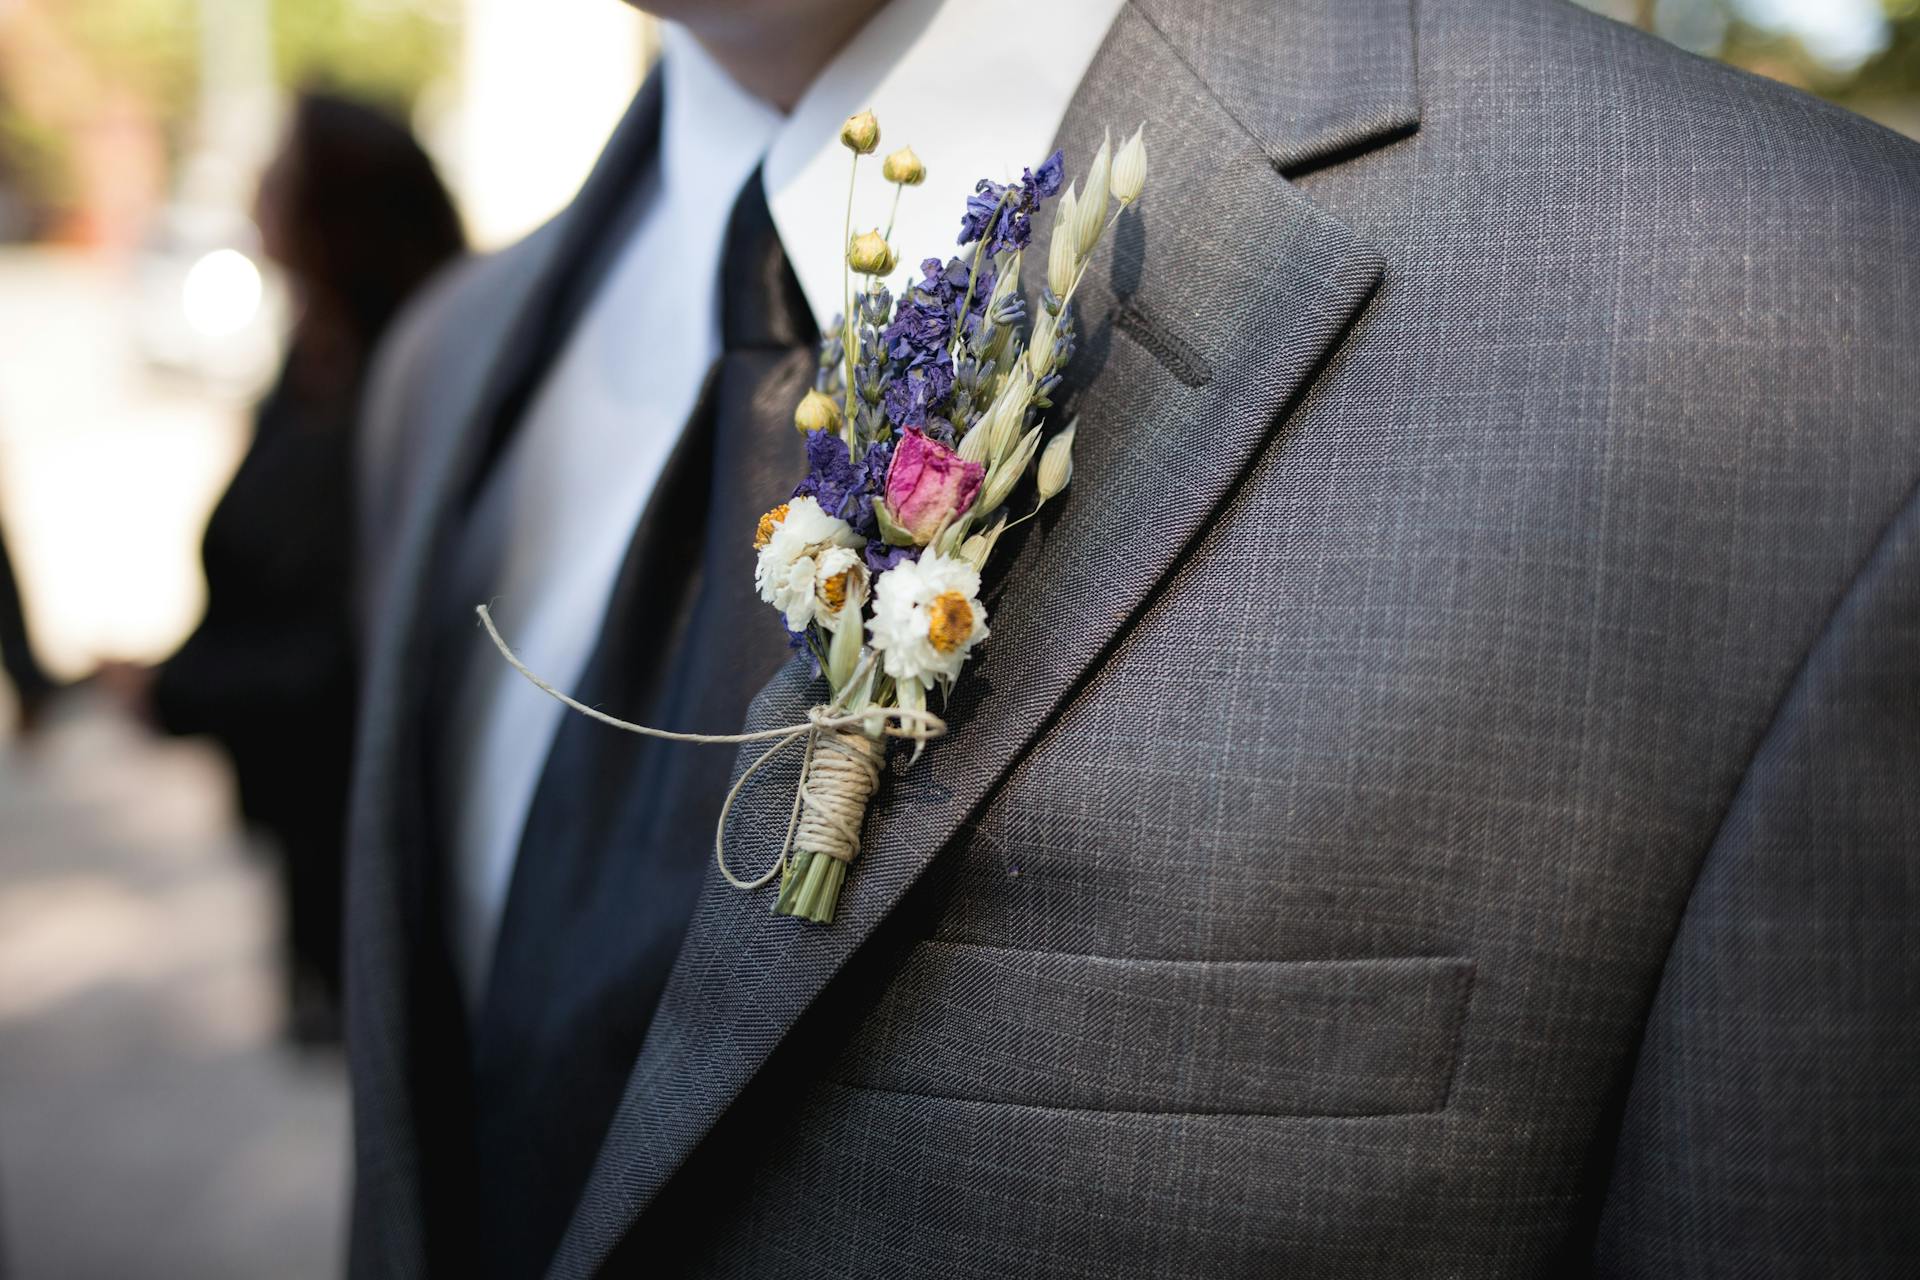 A flower boutonnière on a groom's gray suit jacket | Source: Pexels